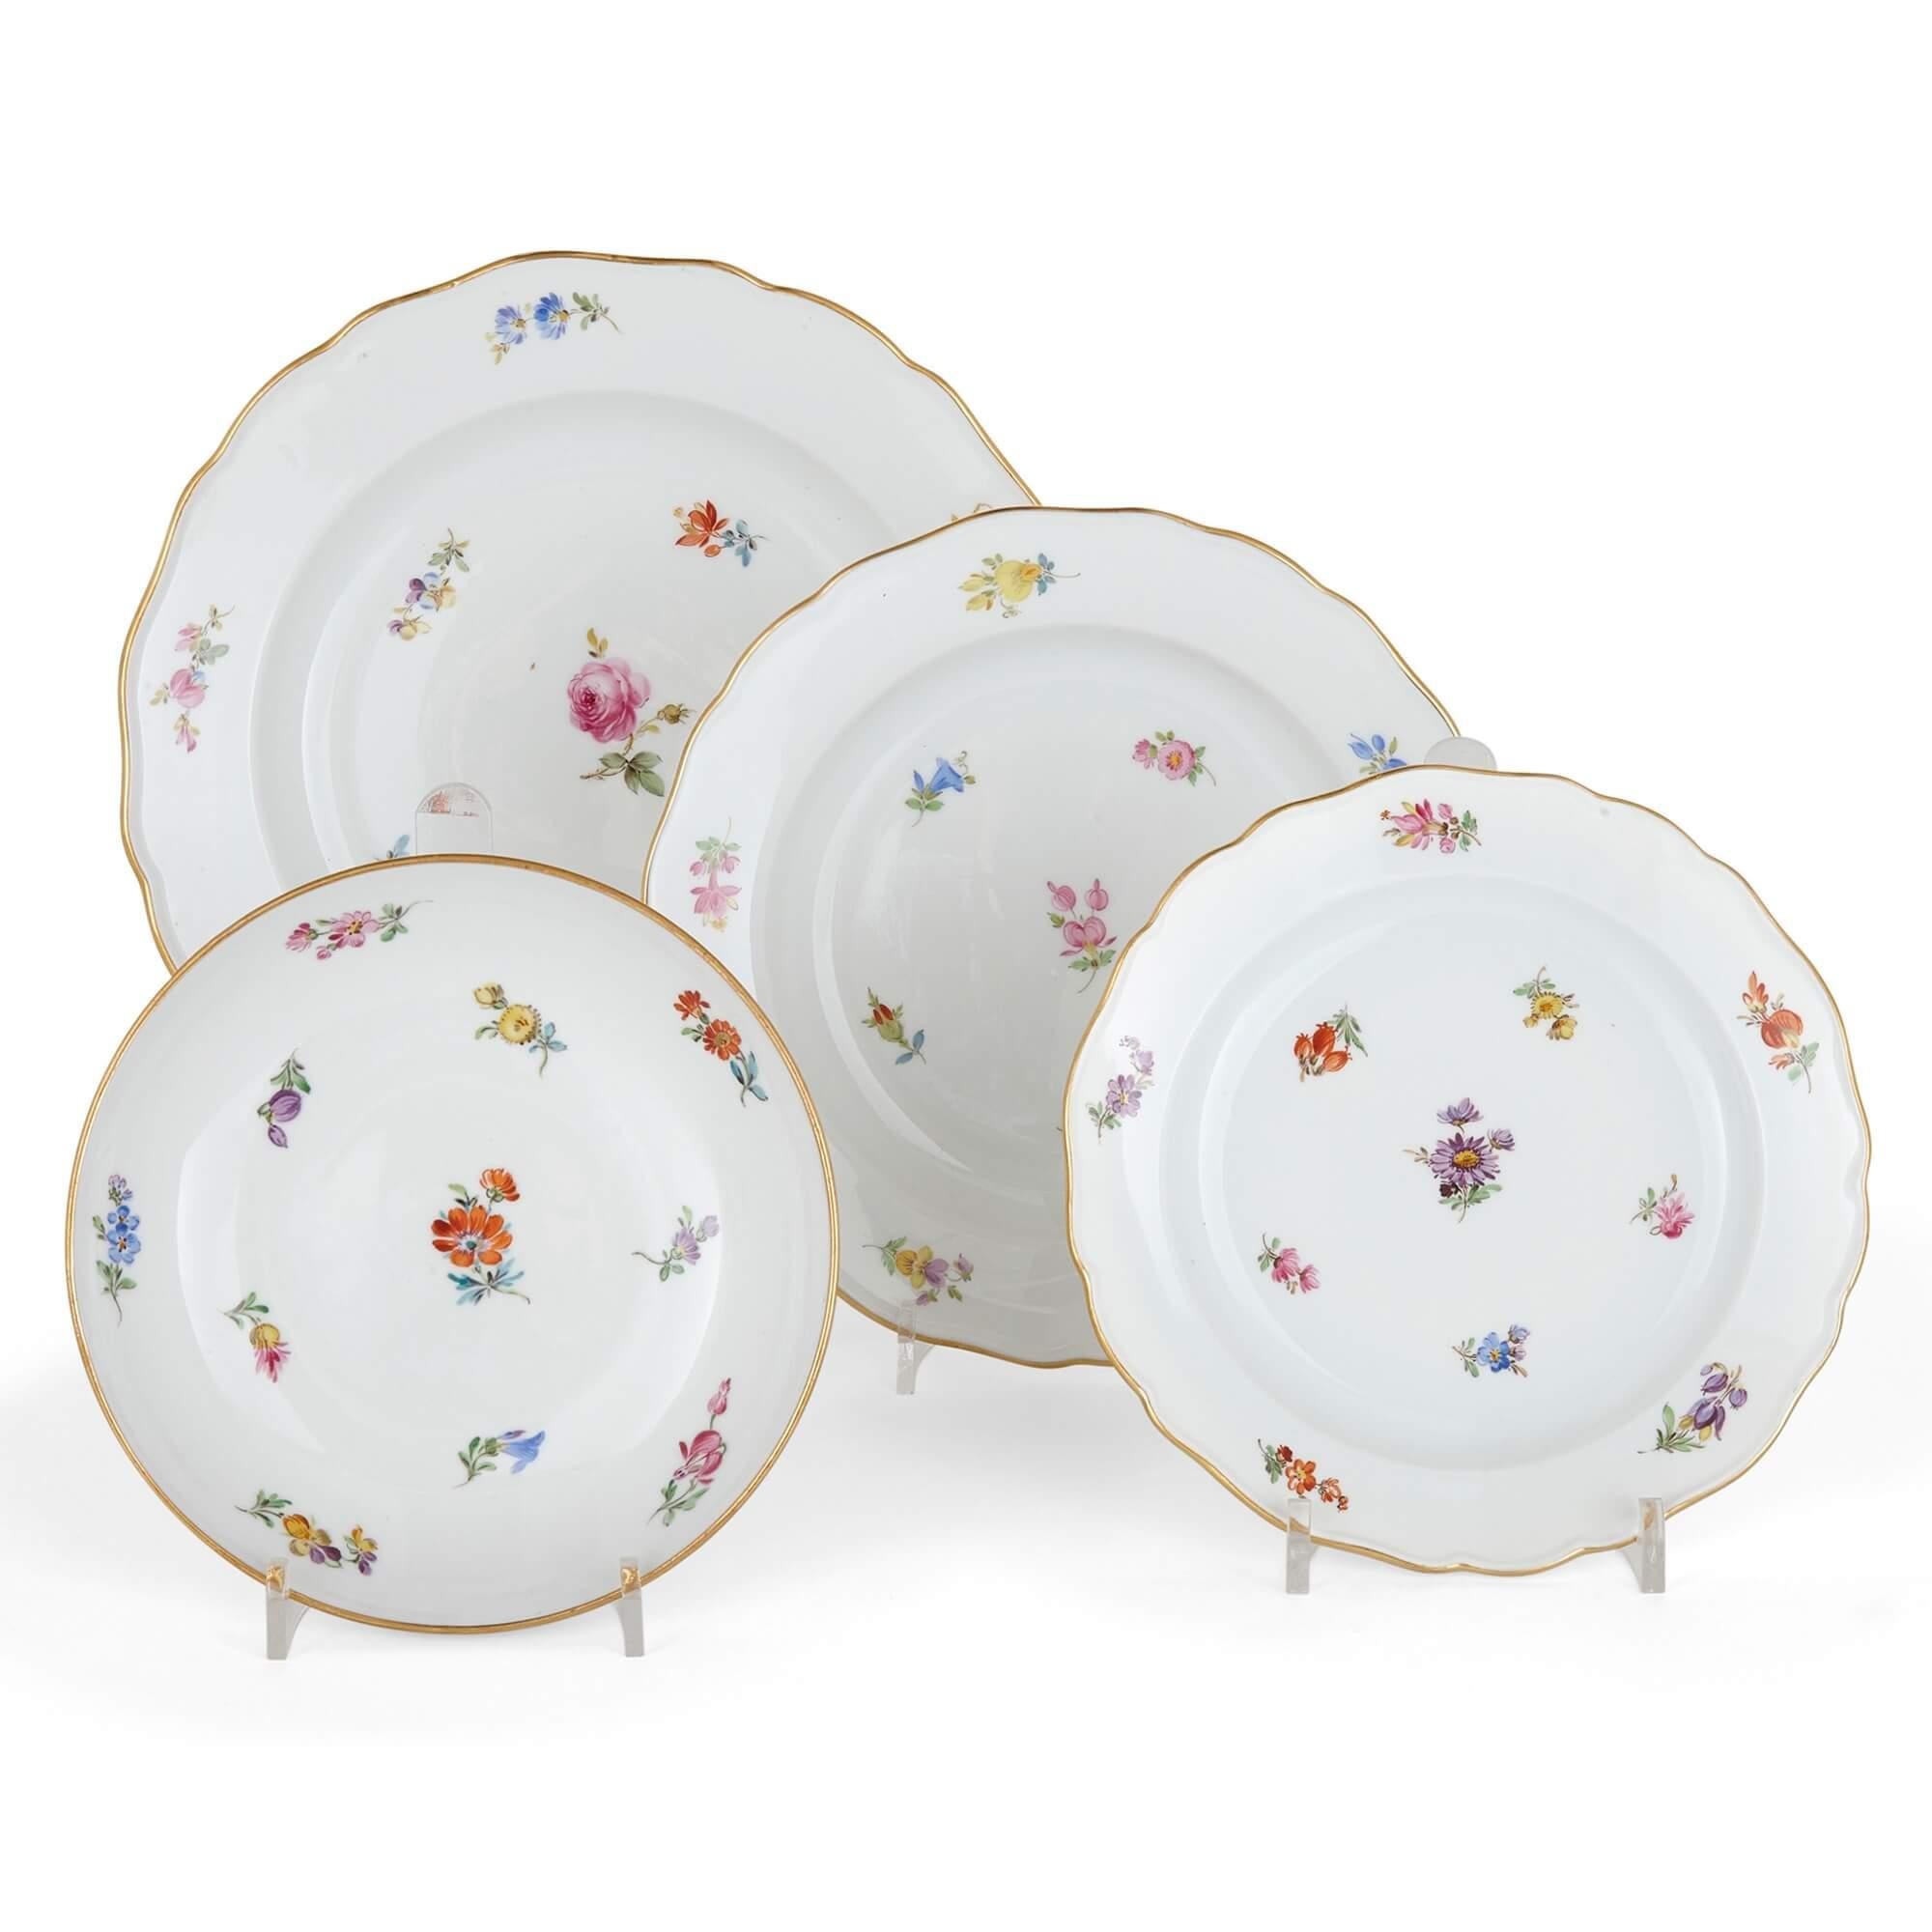 Modern Very Large Meissen Porcelain Dinner Service with Floral Motifs